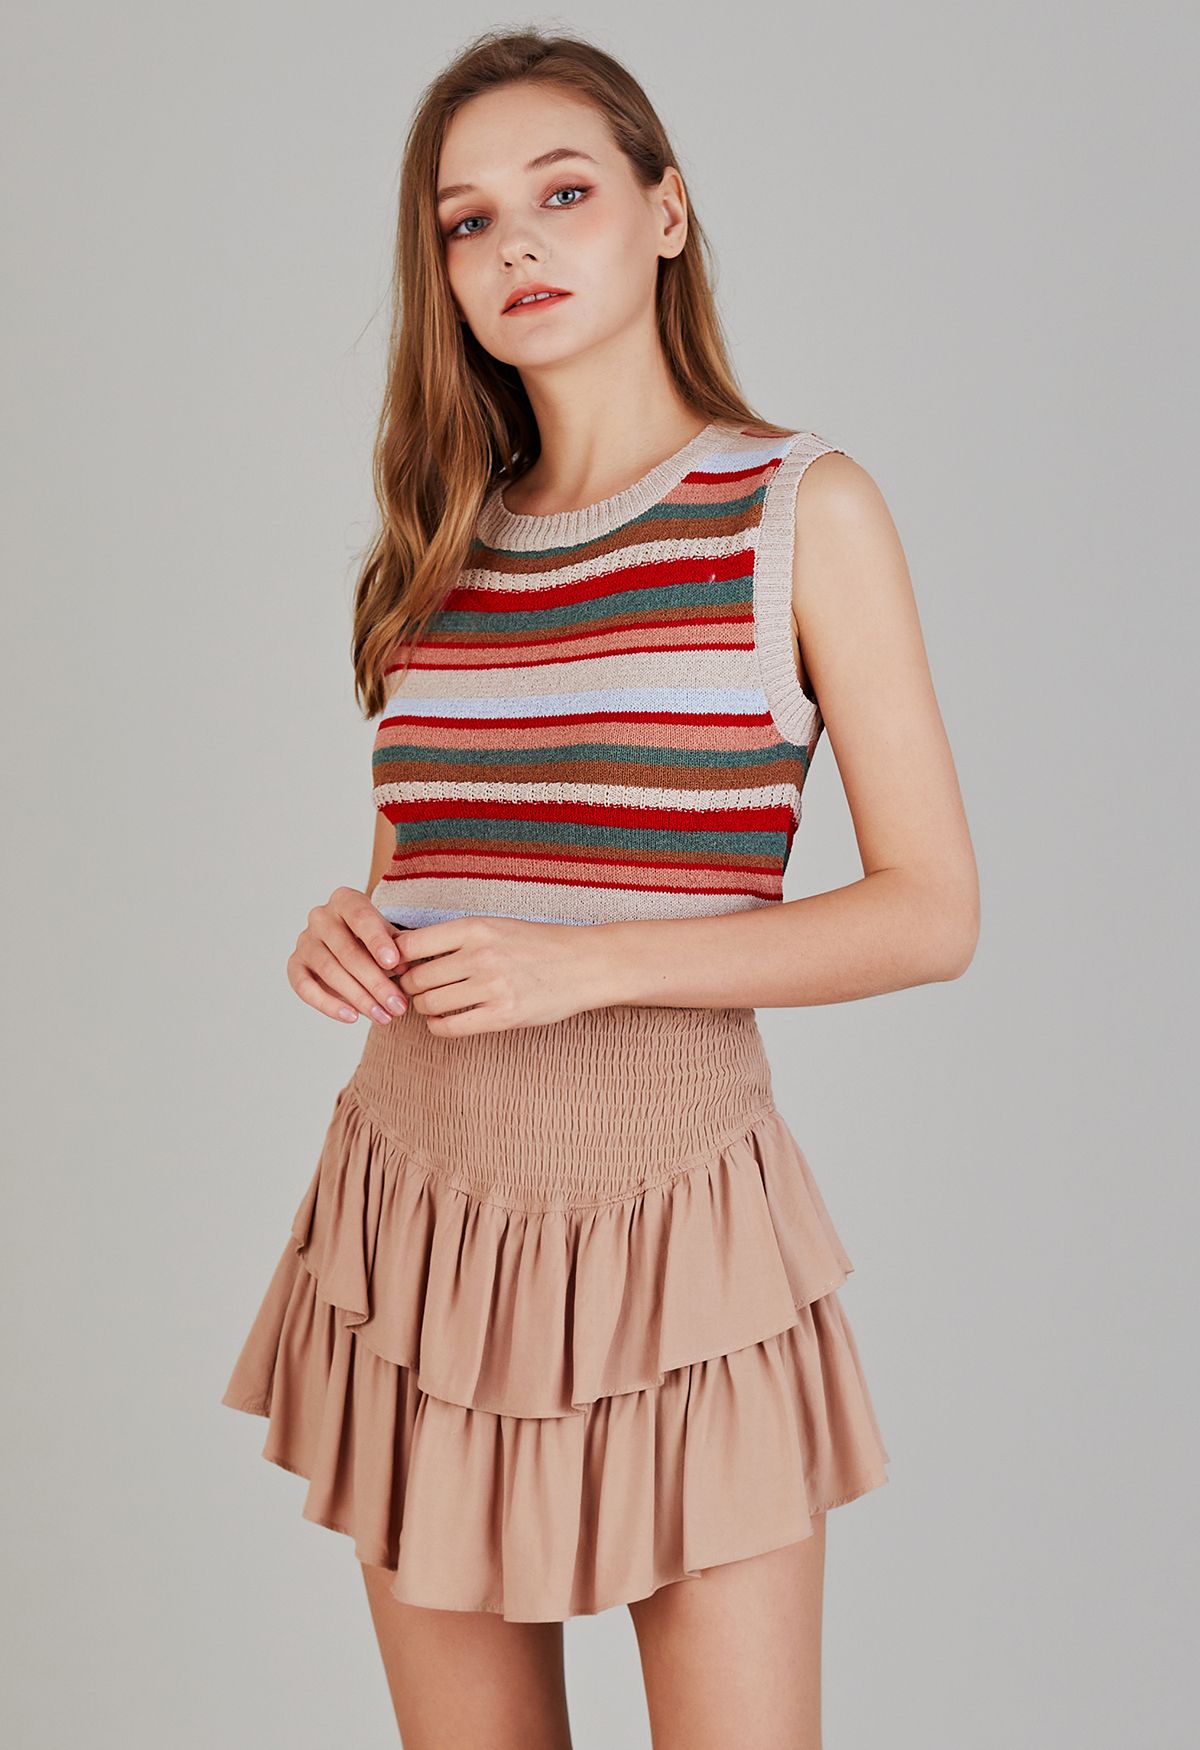 Multicolor Stripe Sleeveless Knit Top